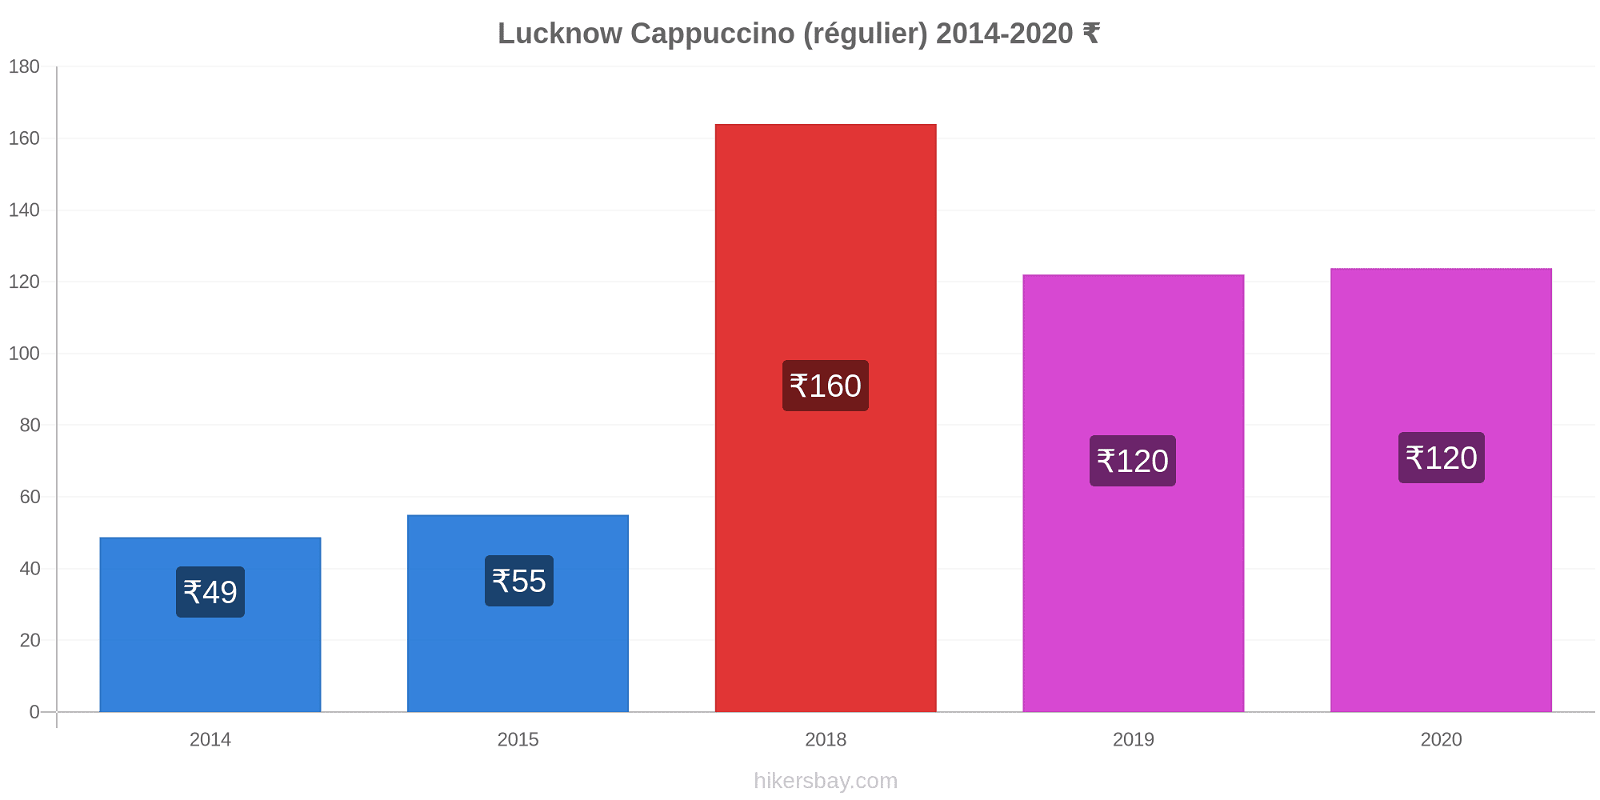 Lucknow changements de prix Cappuccino (régulier) hikersbay.com